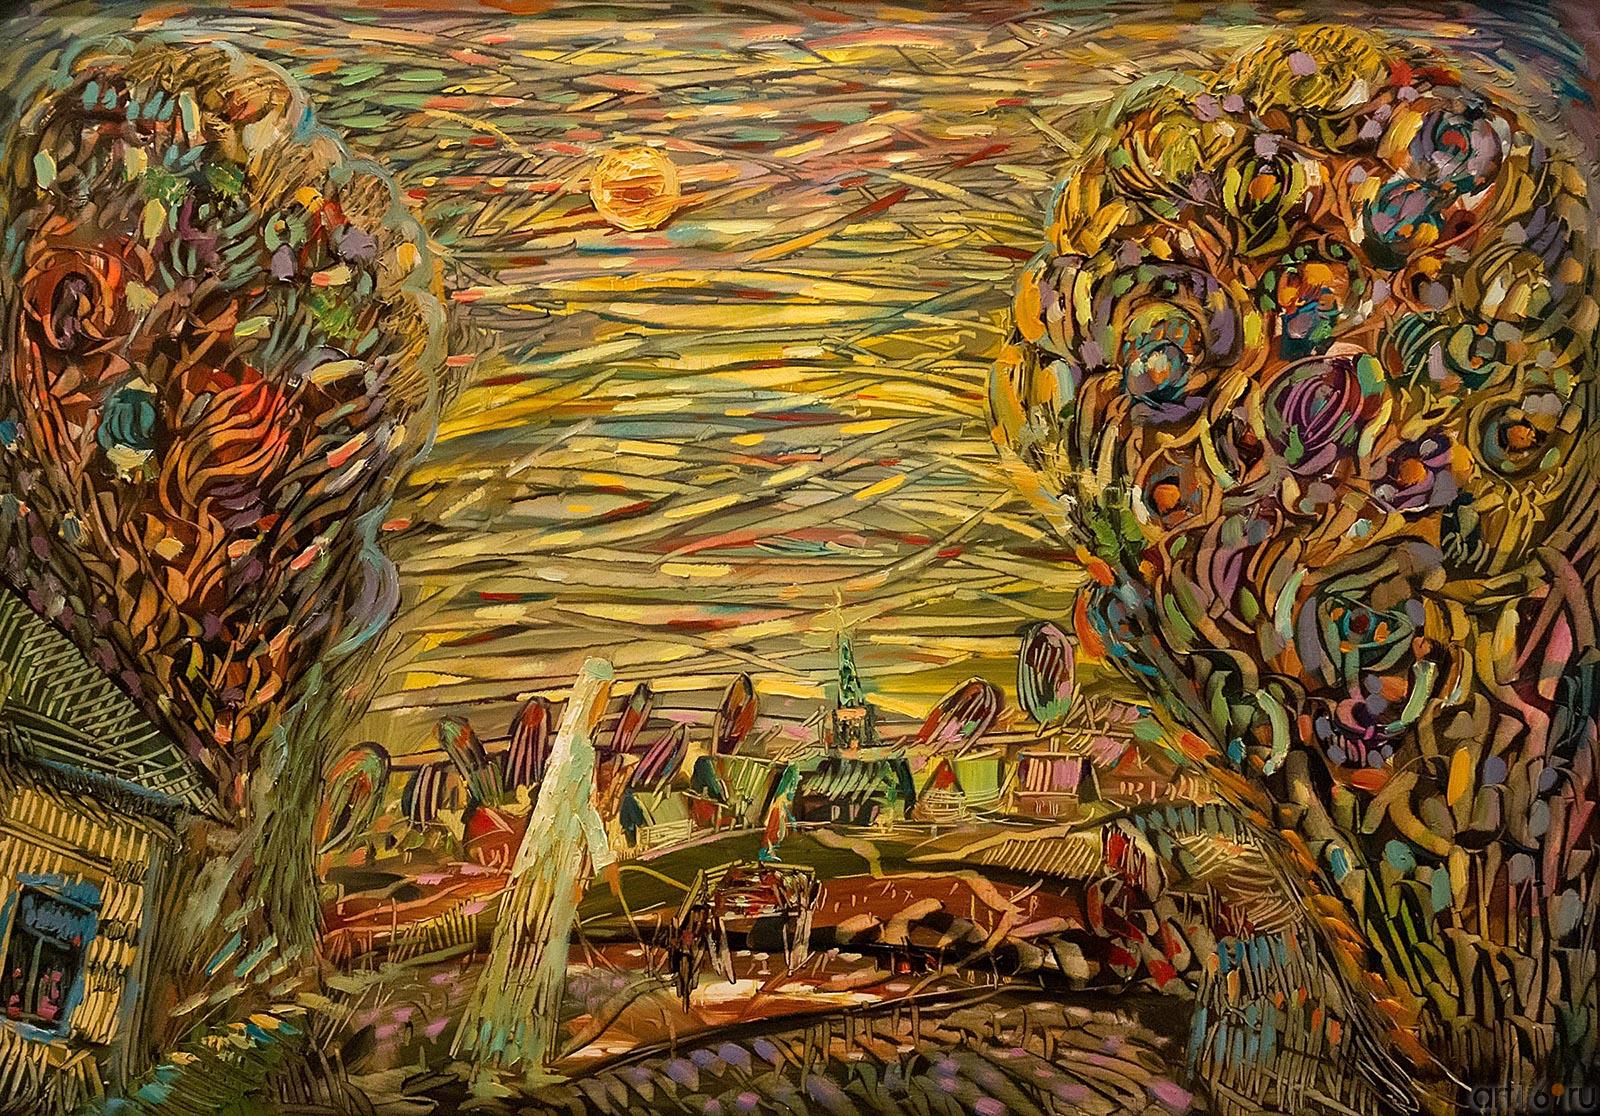 Хазиев Мадьяр Шарипович (1949 г.р.) ʺНа окраине деревниʺ 70x100 холст; масло 2009г.::Галерея "Артэко". Выставка группы "Тамга"